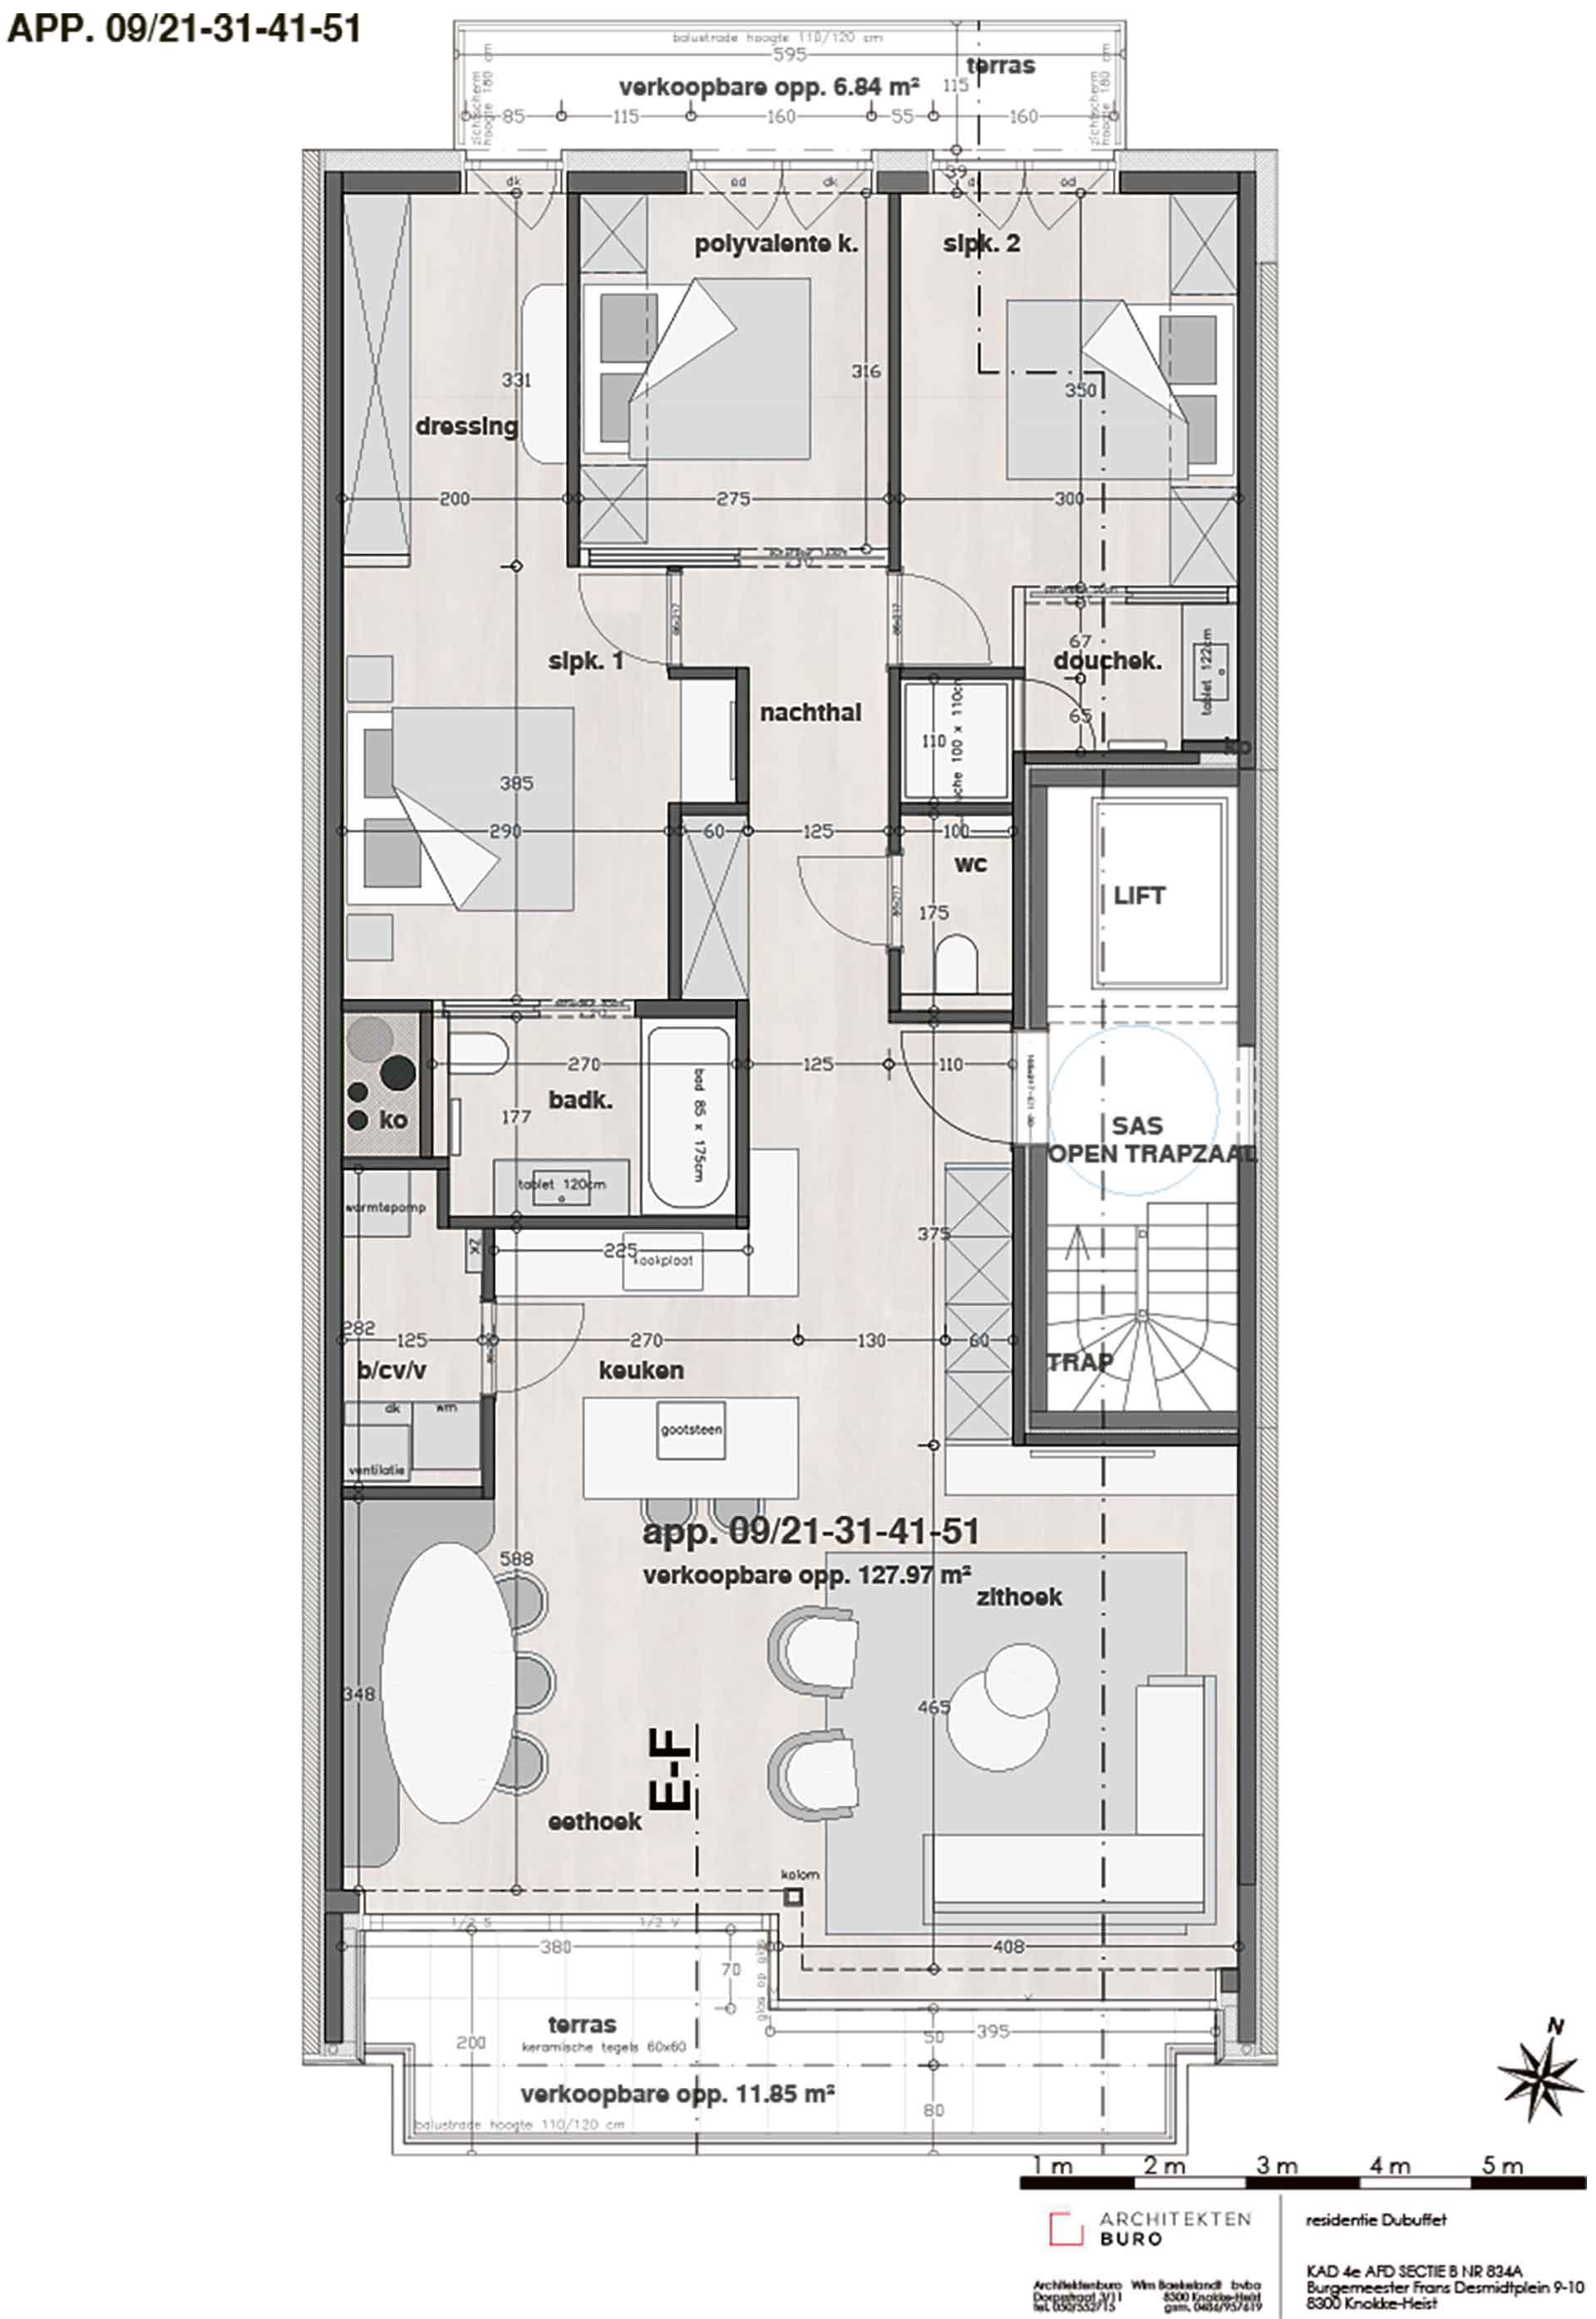 Residentie <br/> Dubuffet - image appartement-te-koop-knokke-residentie-dubuffet-plan-type-nieuw on https://hoprom.be